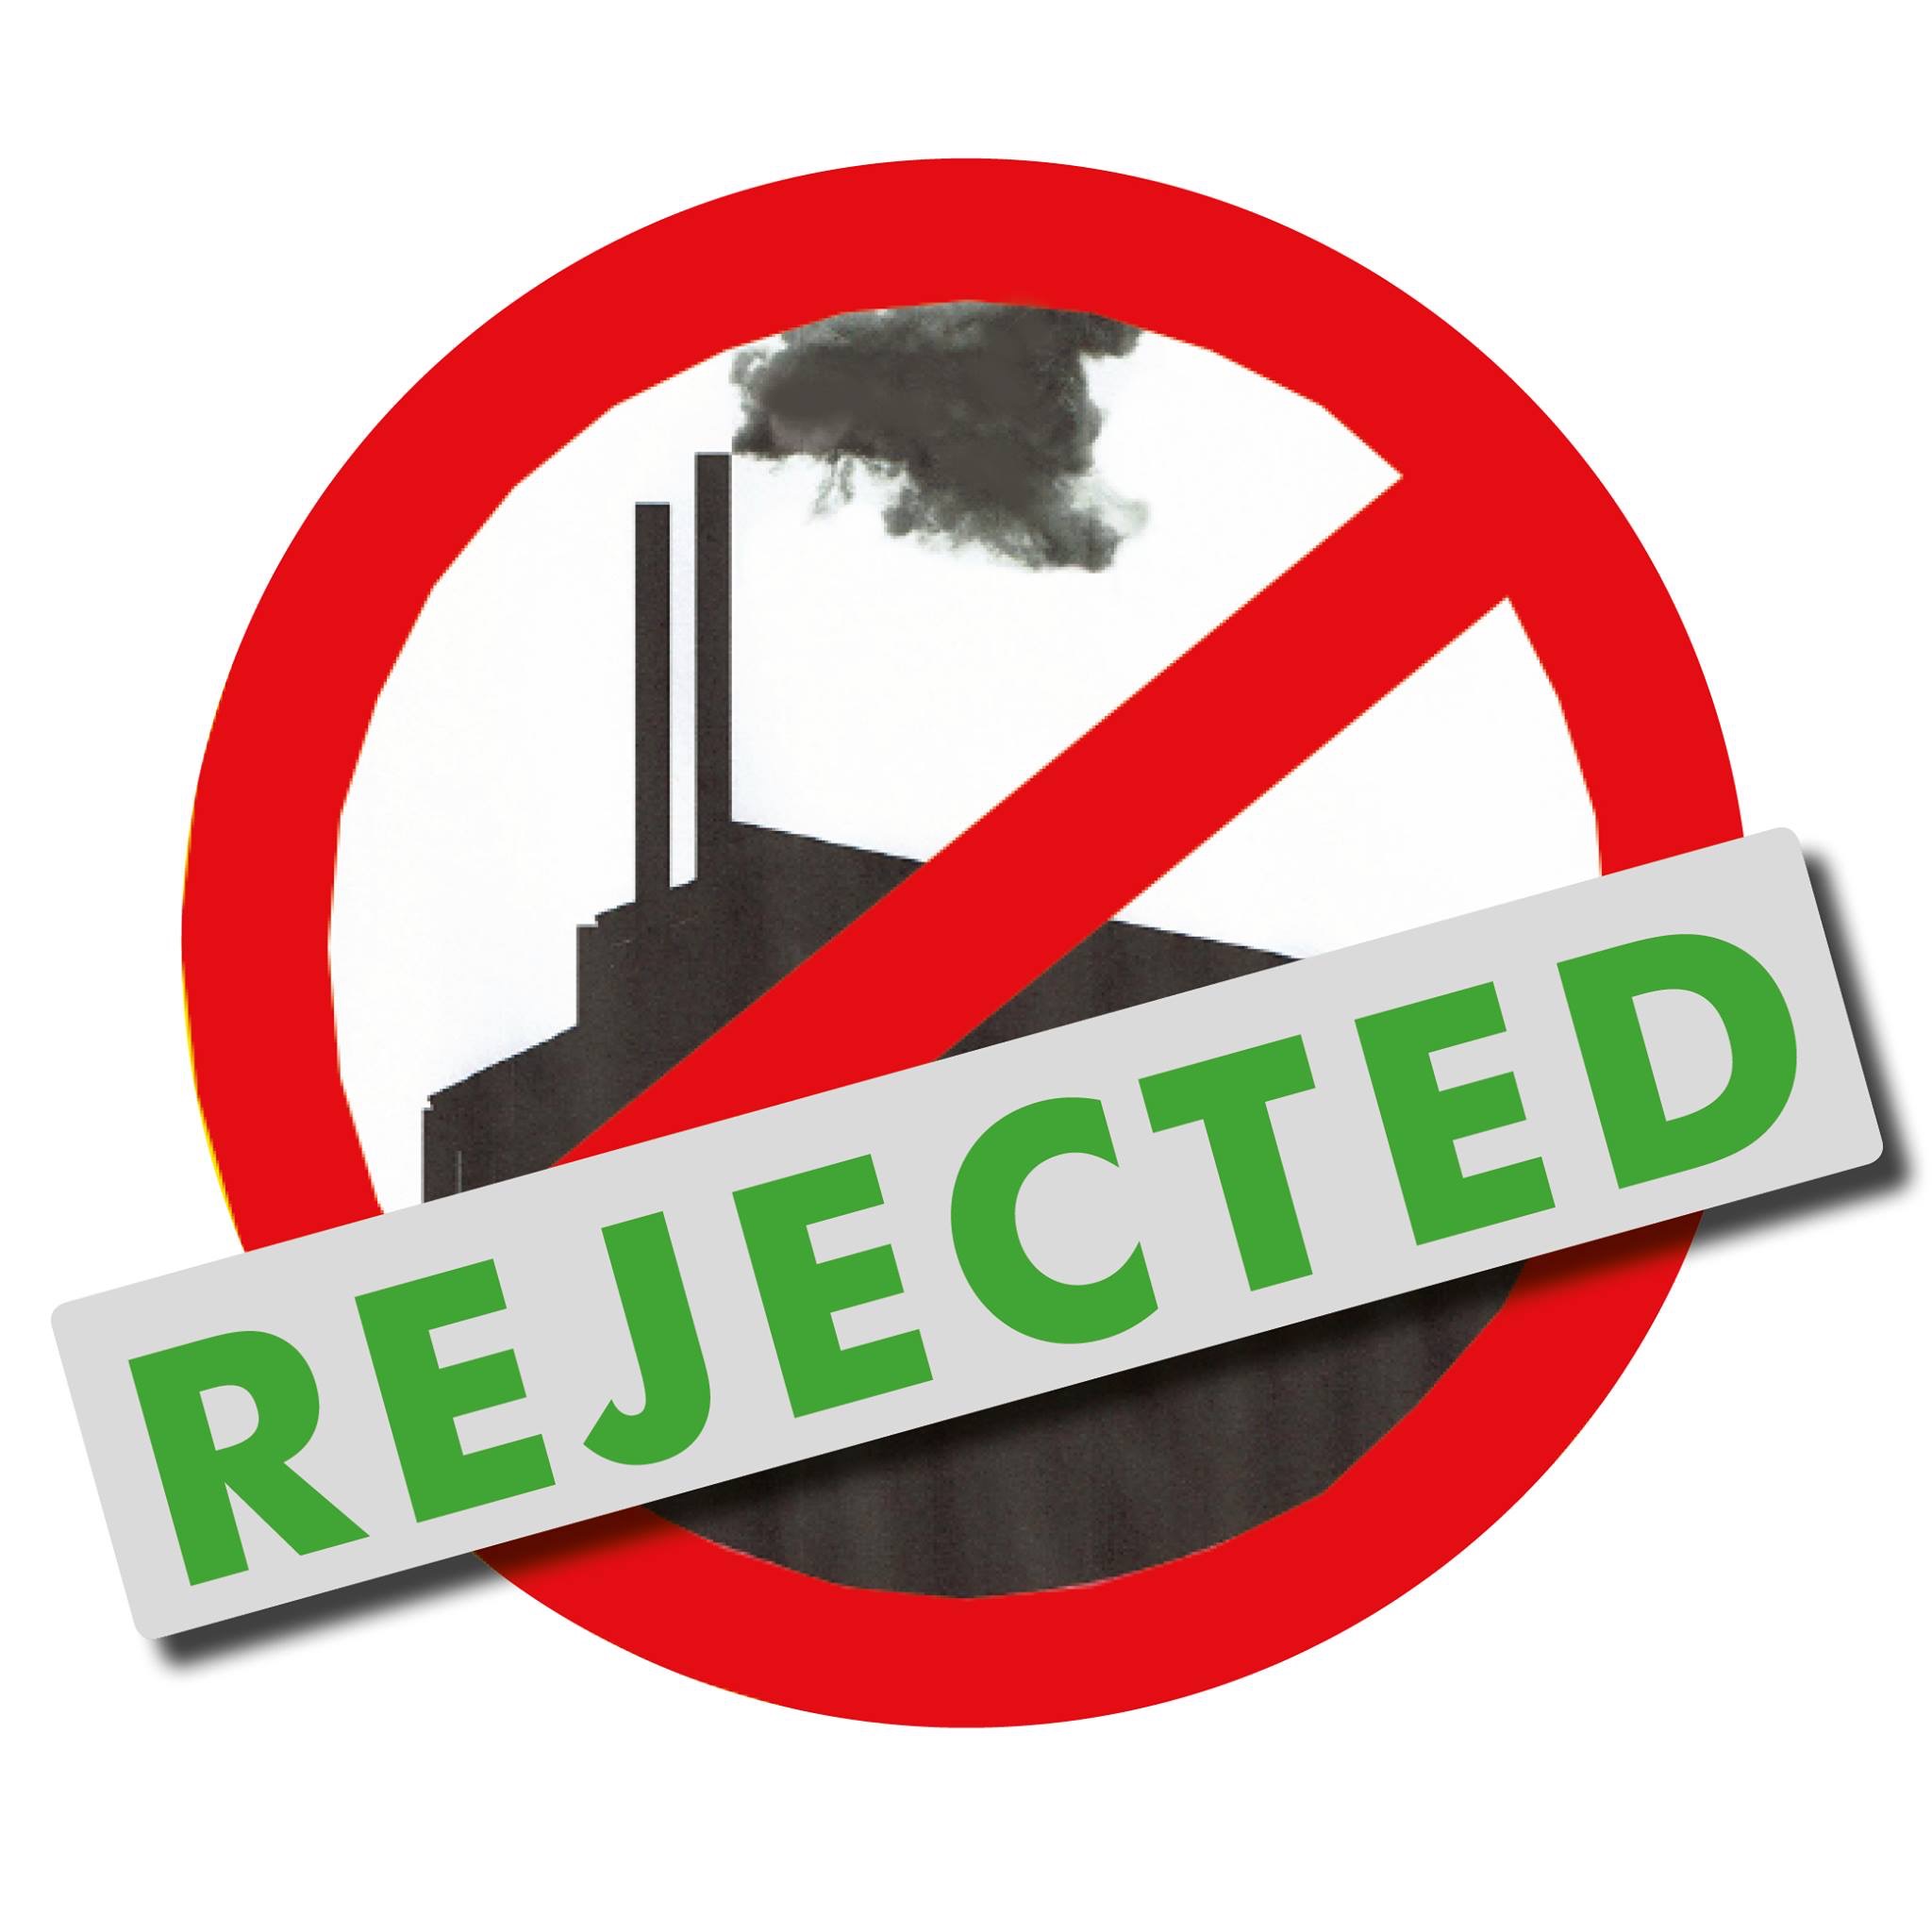 Incinerator Proposal Rejected